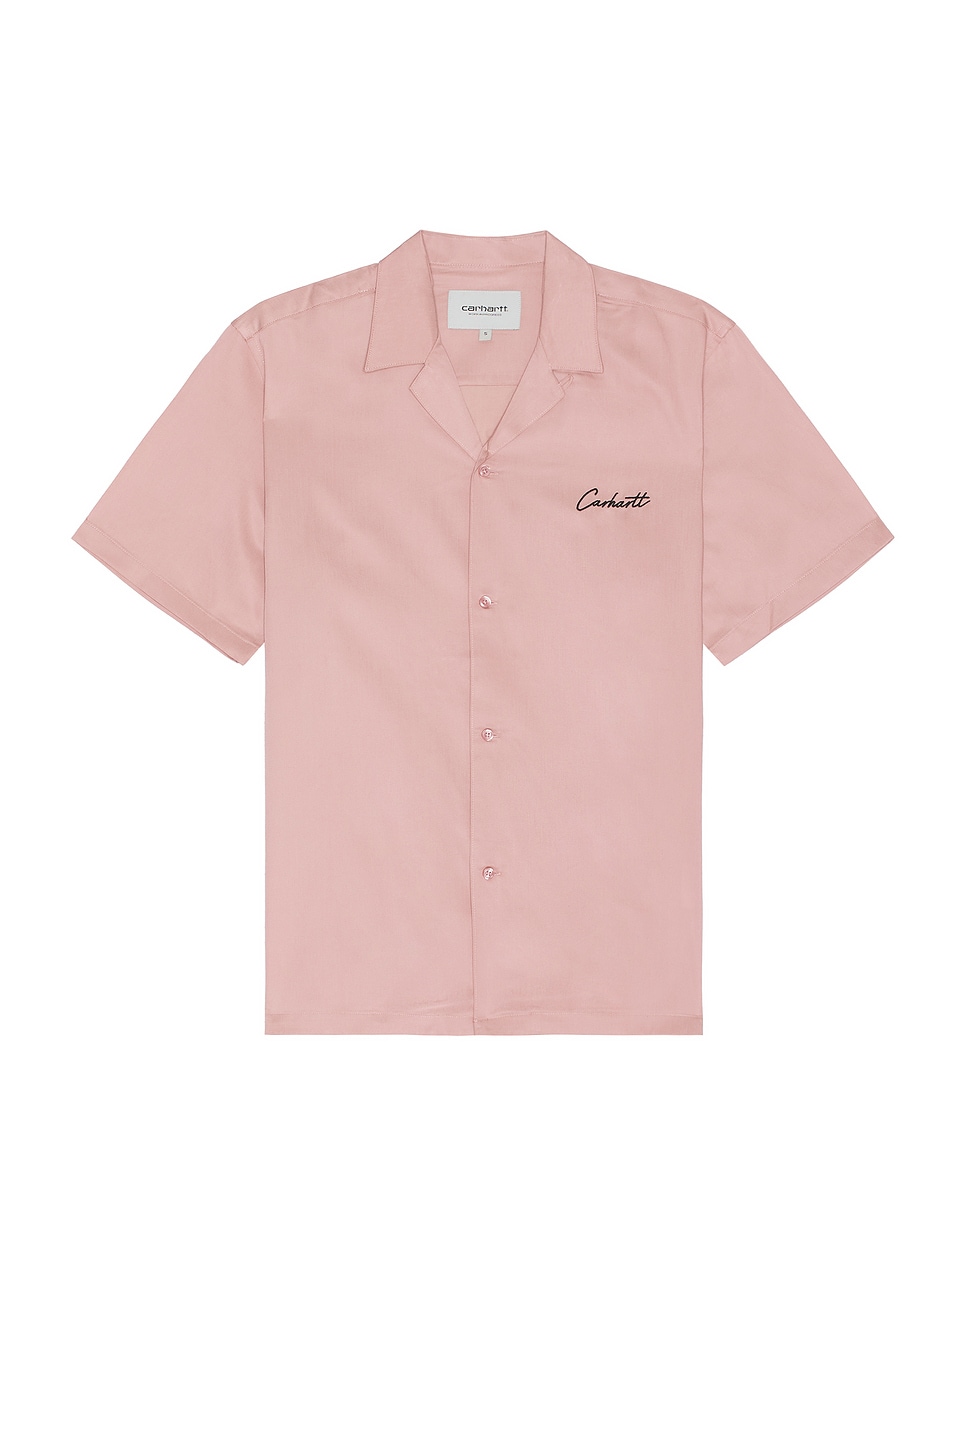 Image 1 of Carhartt WIP Short Sleeve Delray Shirt in Glassy Pink & Black